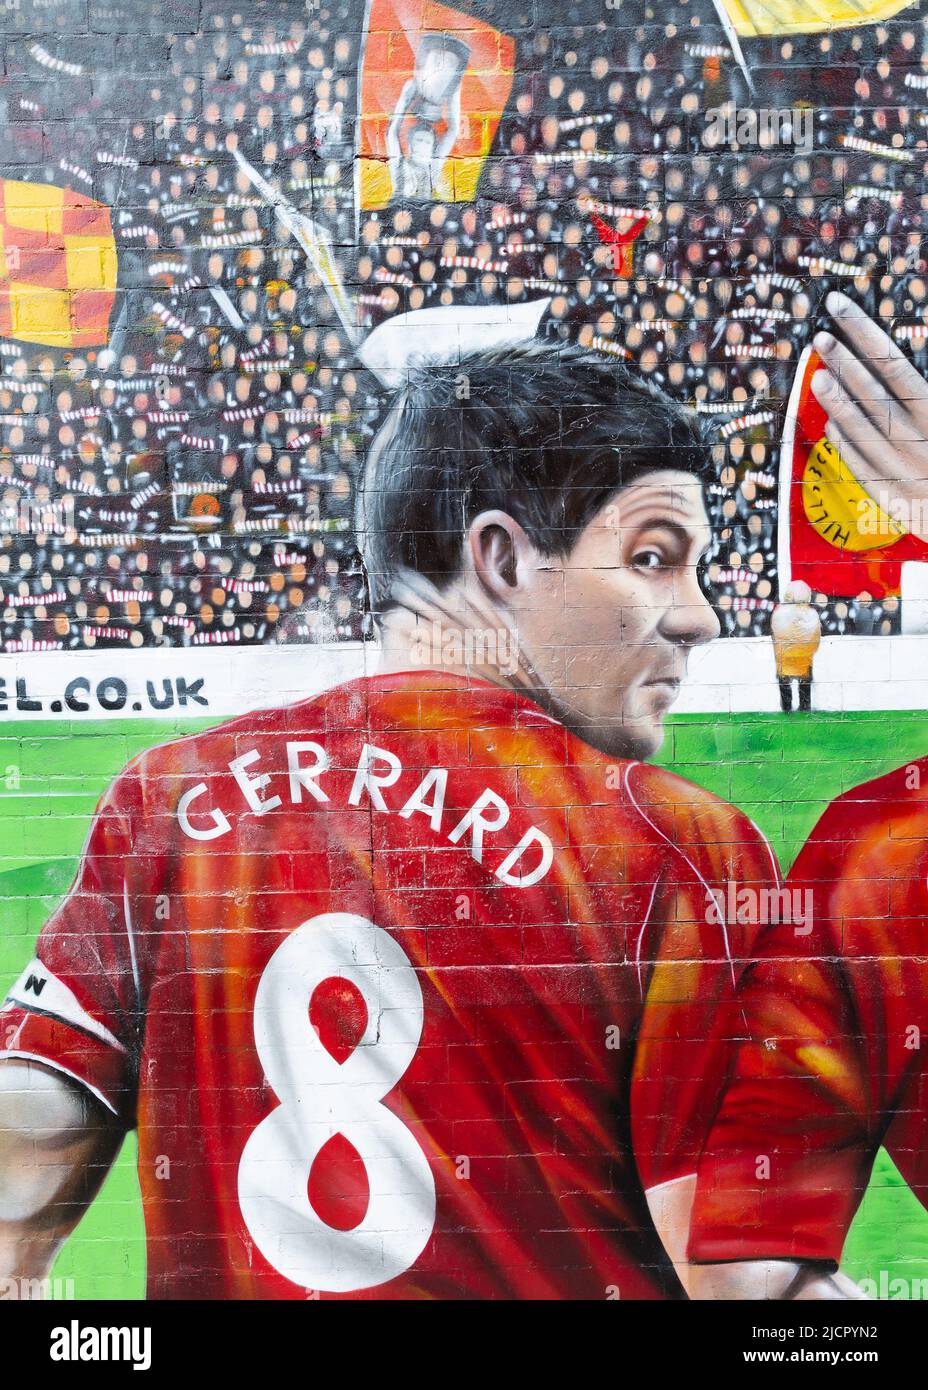 Liverpool FC mural featuring Steven Gerrard, Anfield, Liverpool, England, UK Stock Photo